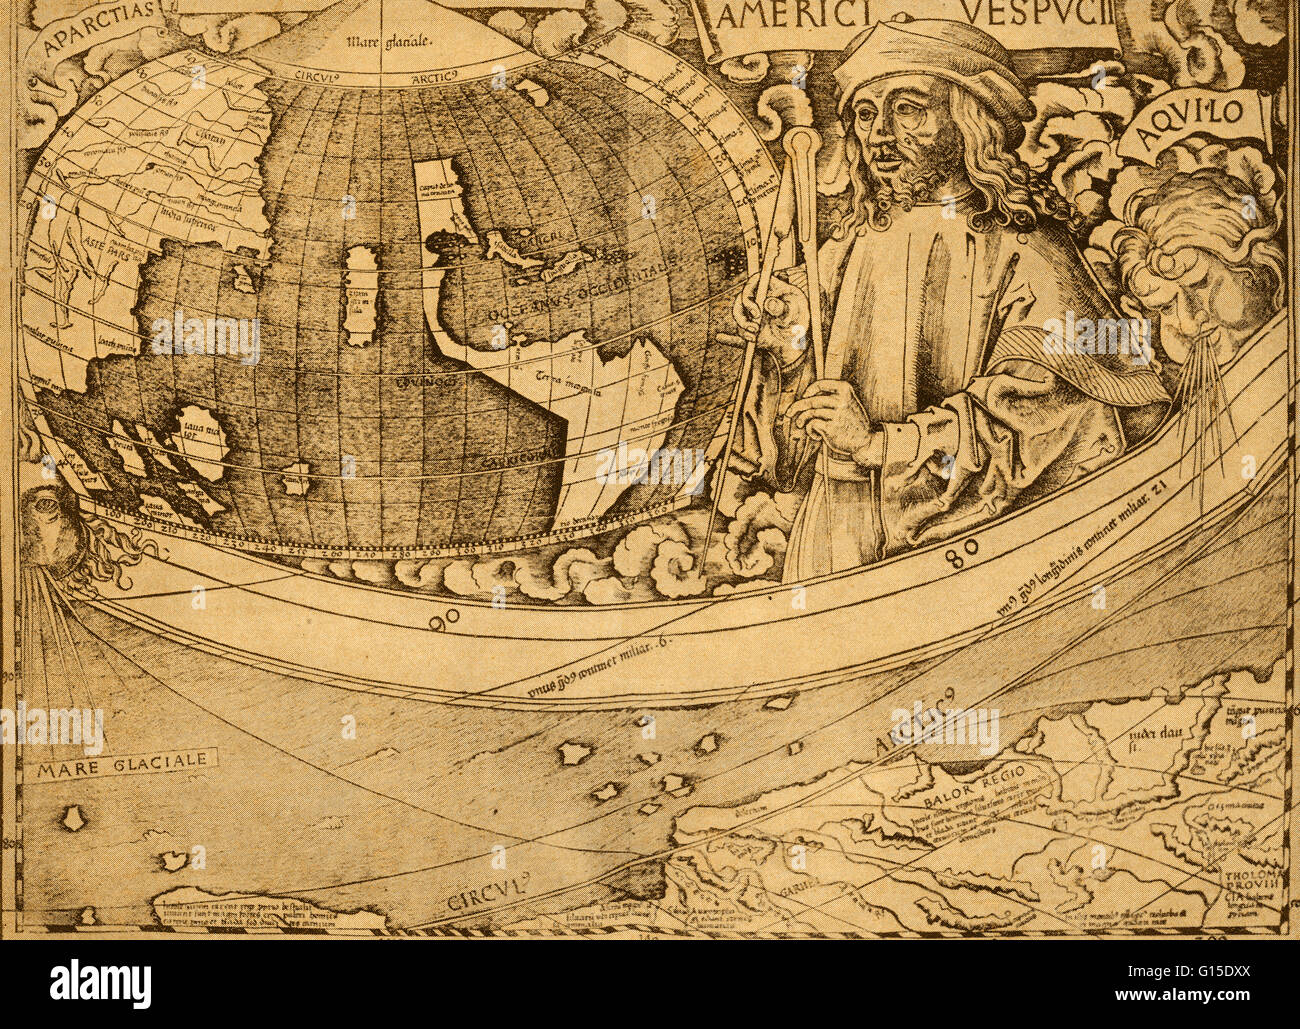 Vespucci gazes at New World in a panel of 1507 map by Martin Waldseemuller. Amerigo Vespucci (March 9, 1454 - February 22, 1512) was an Italian explorer, financier, navigator and cartographer. At the invitation of king Manuel I of Portugal, Vespucci parti Stock Photo